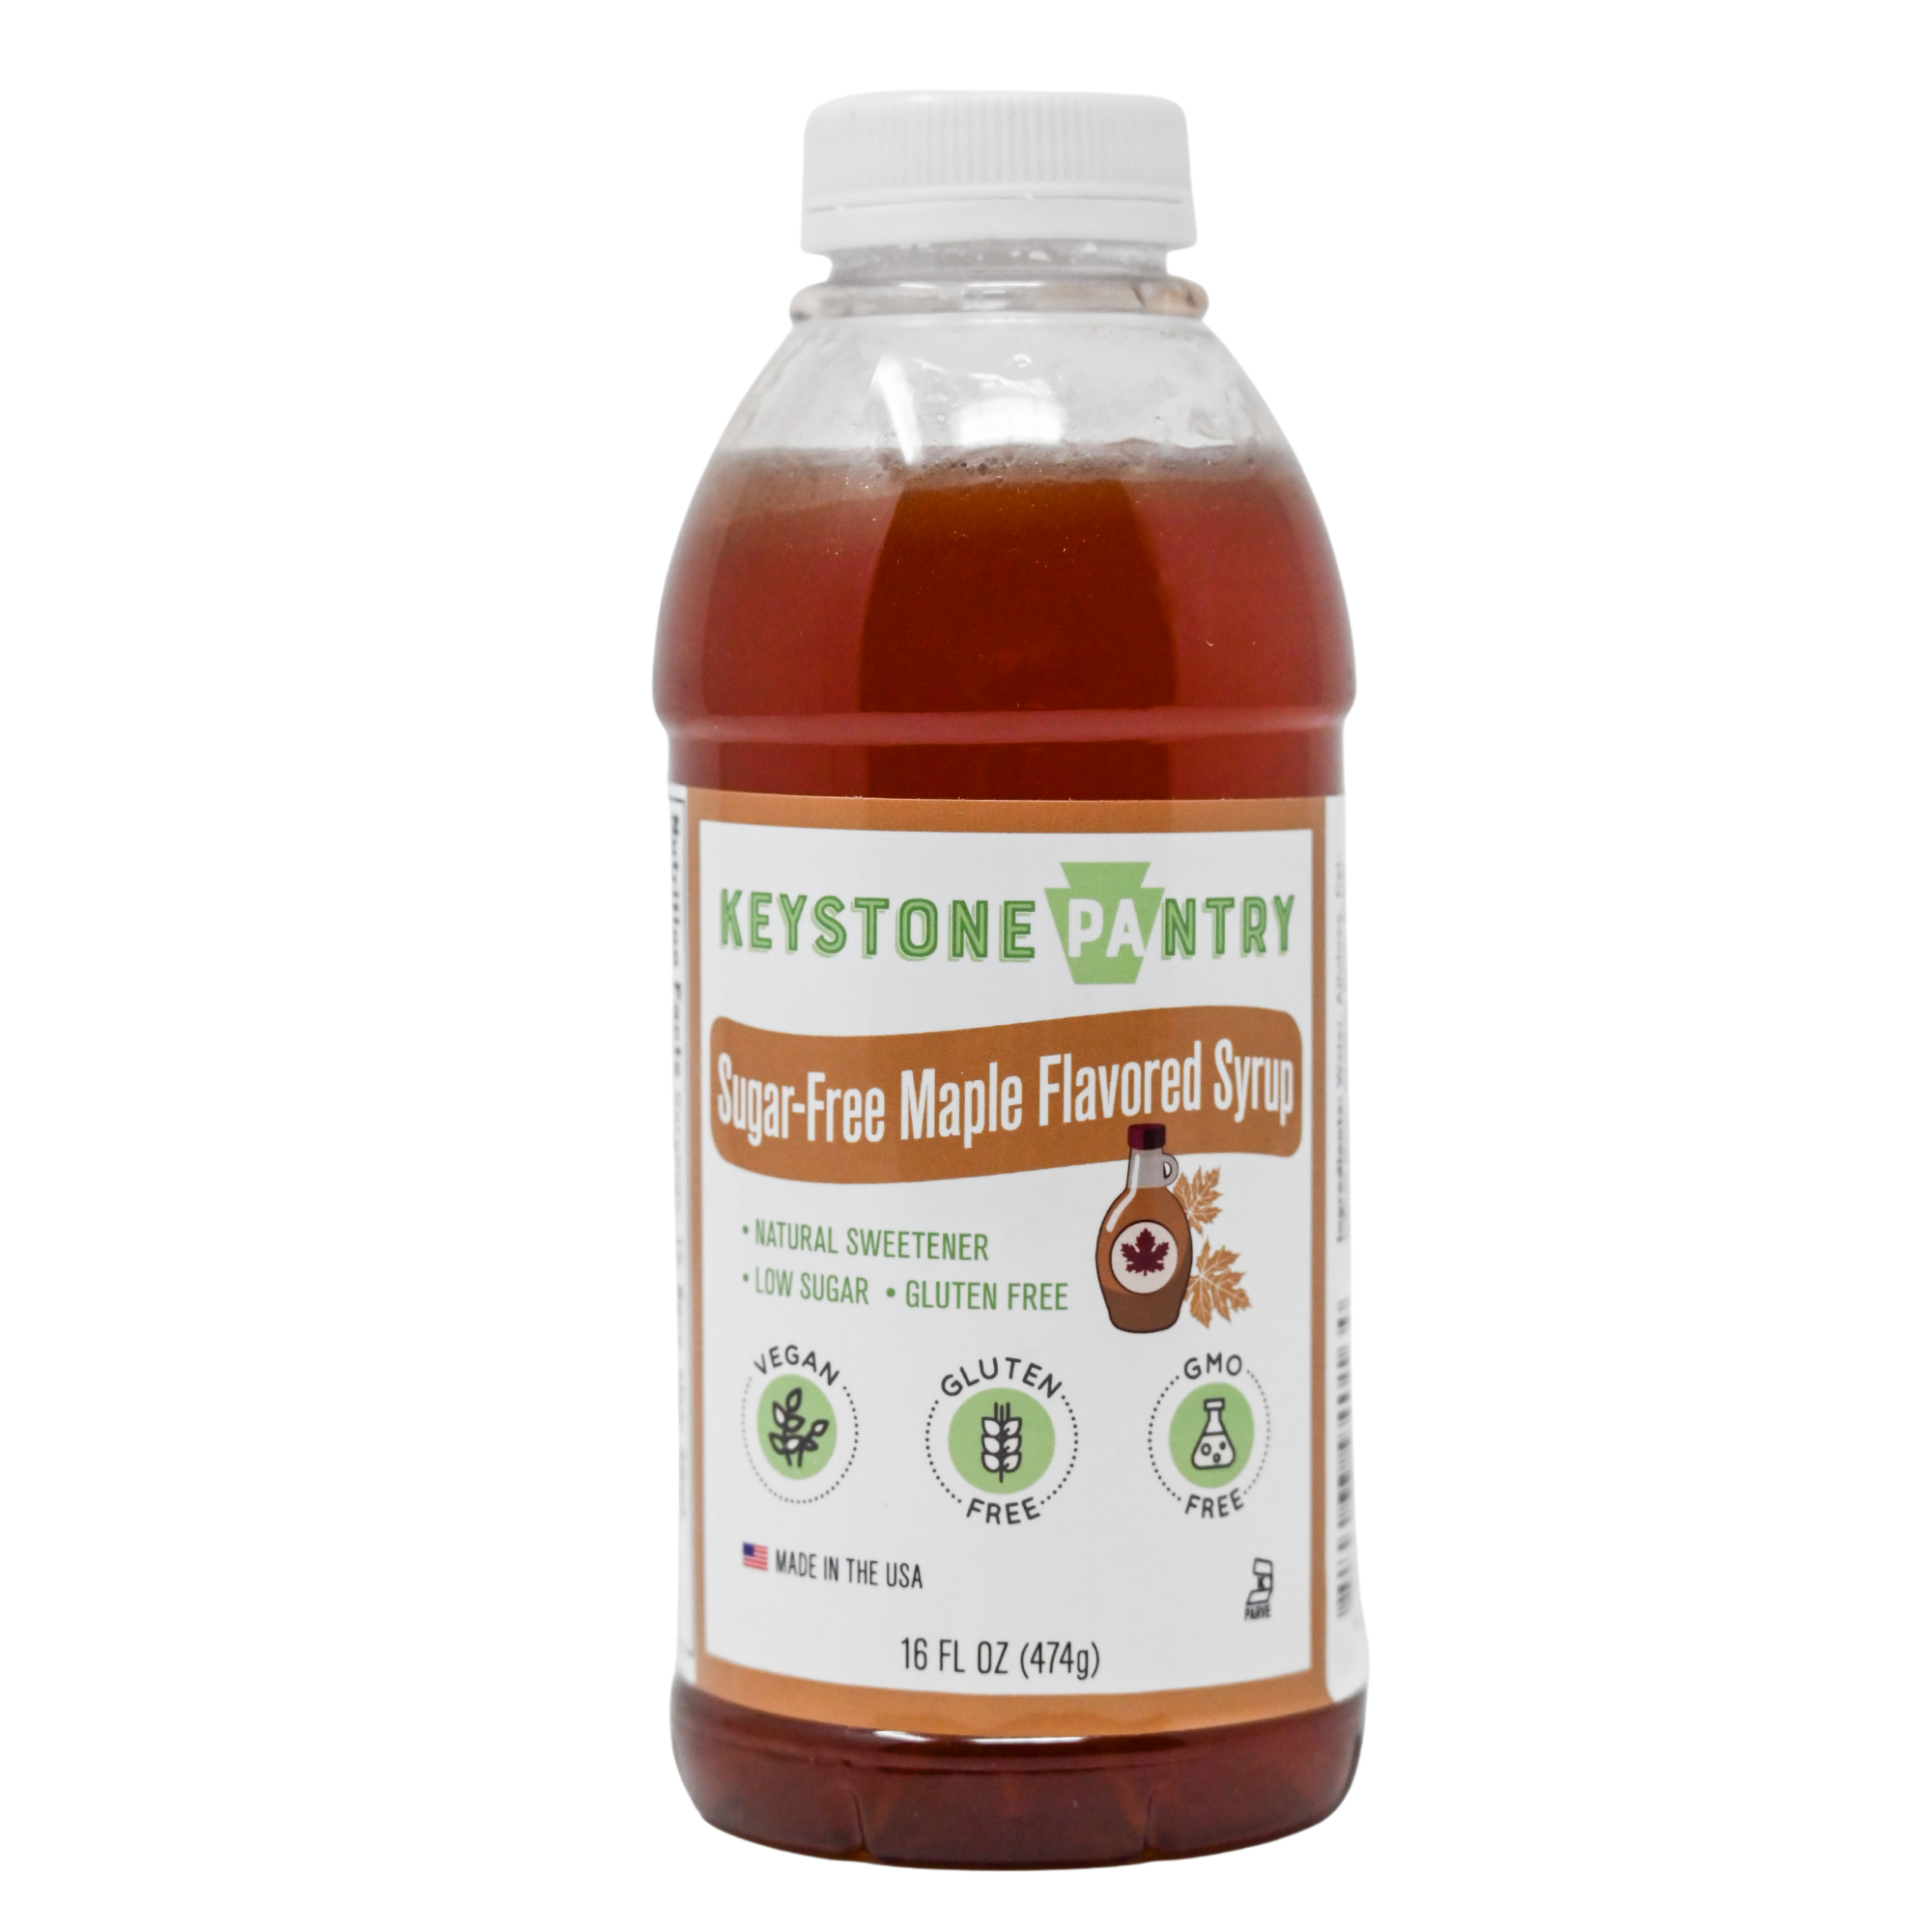 Keystone Pantry Sugar-Free Maple Flavored Syrup